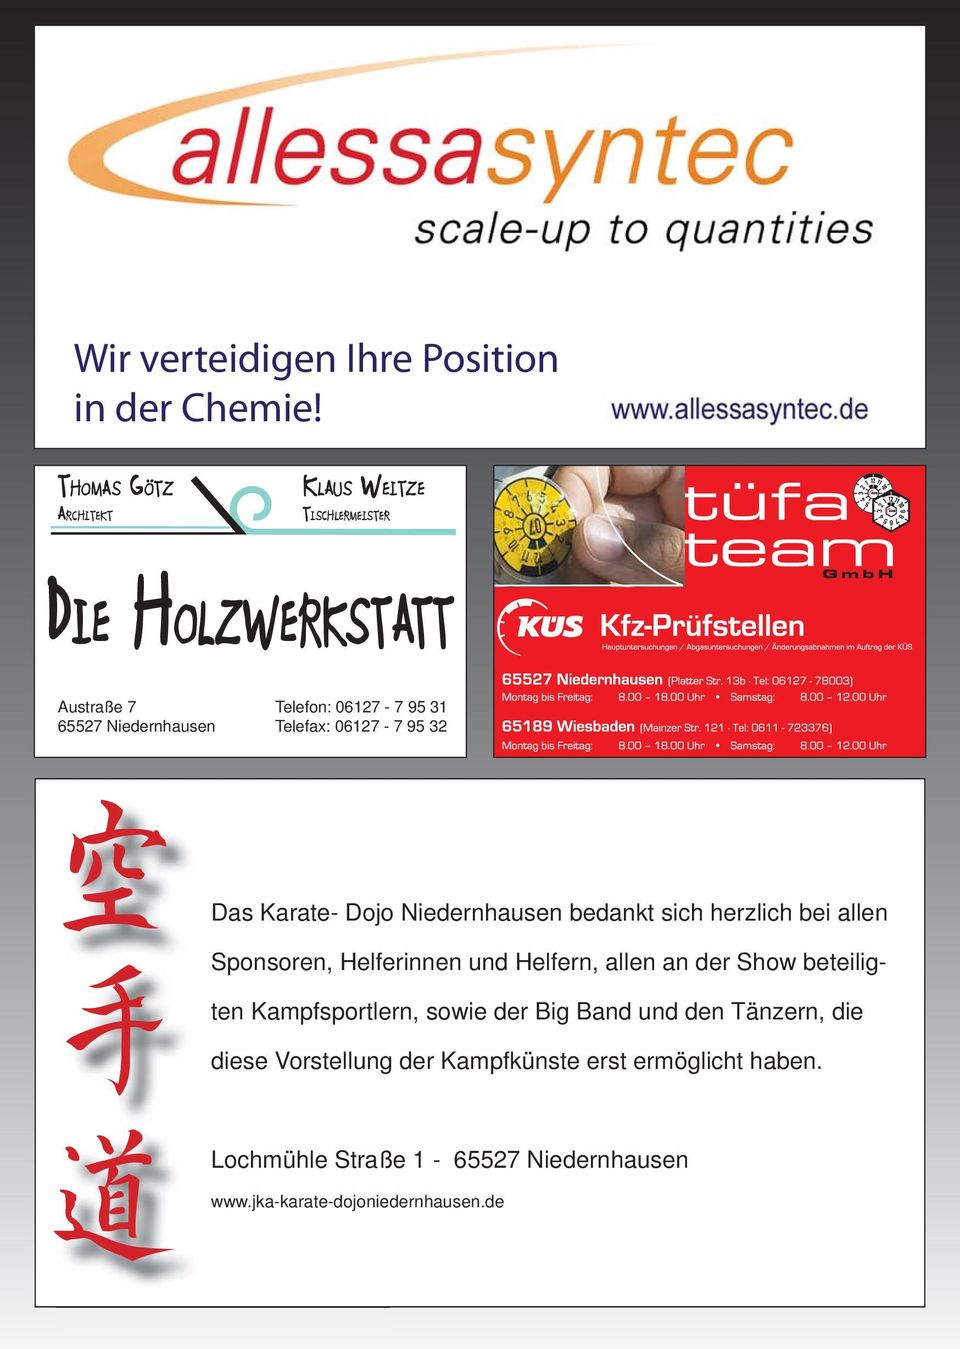 95 32 空 Das Karate- Dojo Niedernhausen bedankt sich herzlich bei allen 手 Sponsoren, Helferinnen und Helfern, allen an